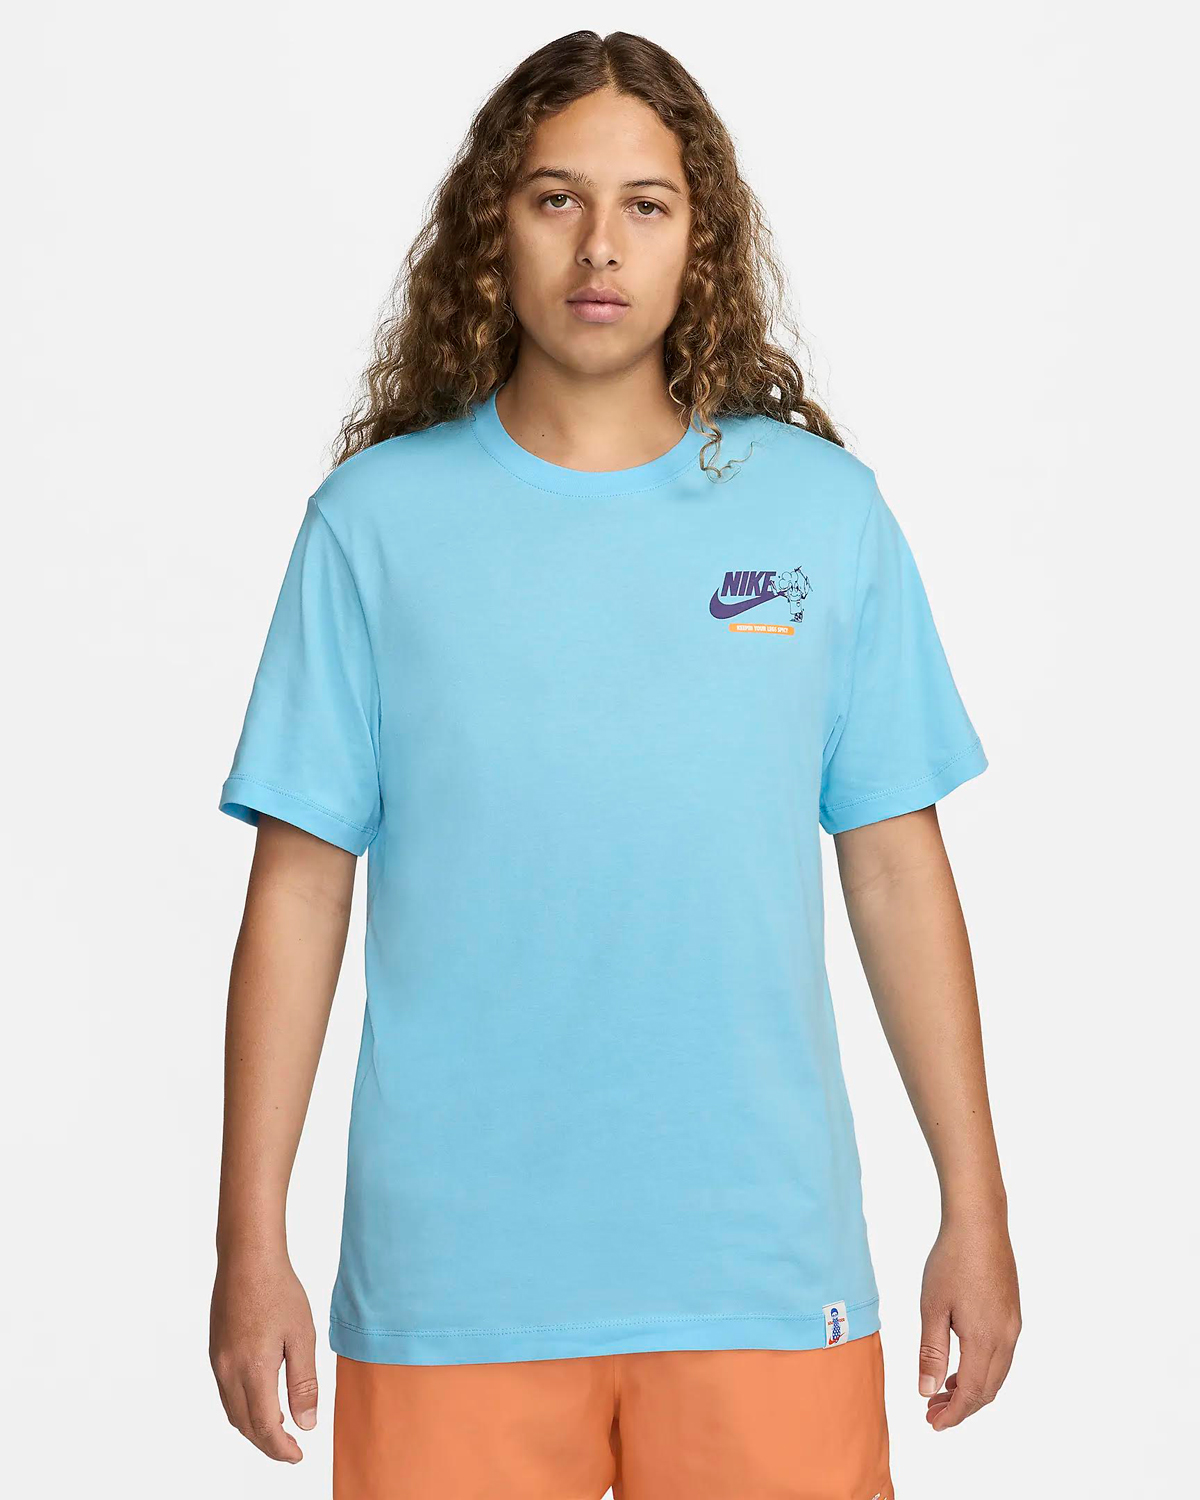 Nike-Sportswear-T-Shirt-Aquarius-Blue-1